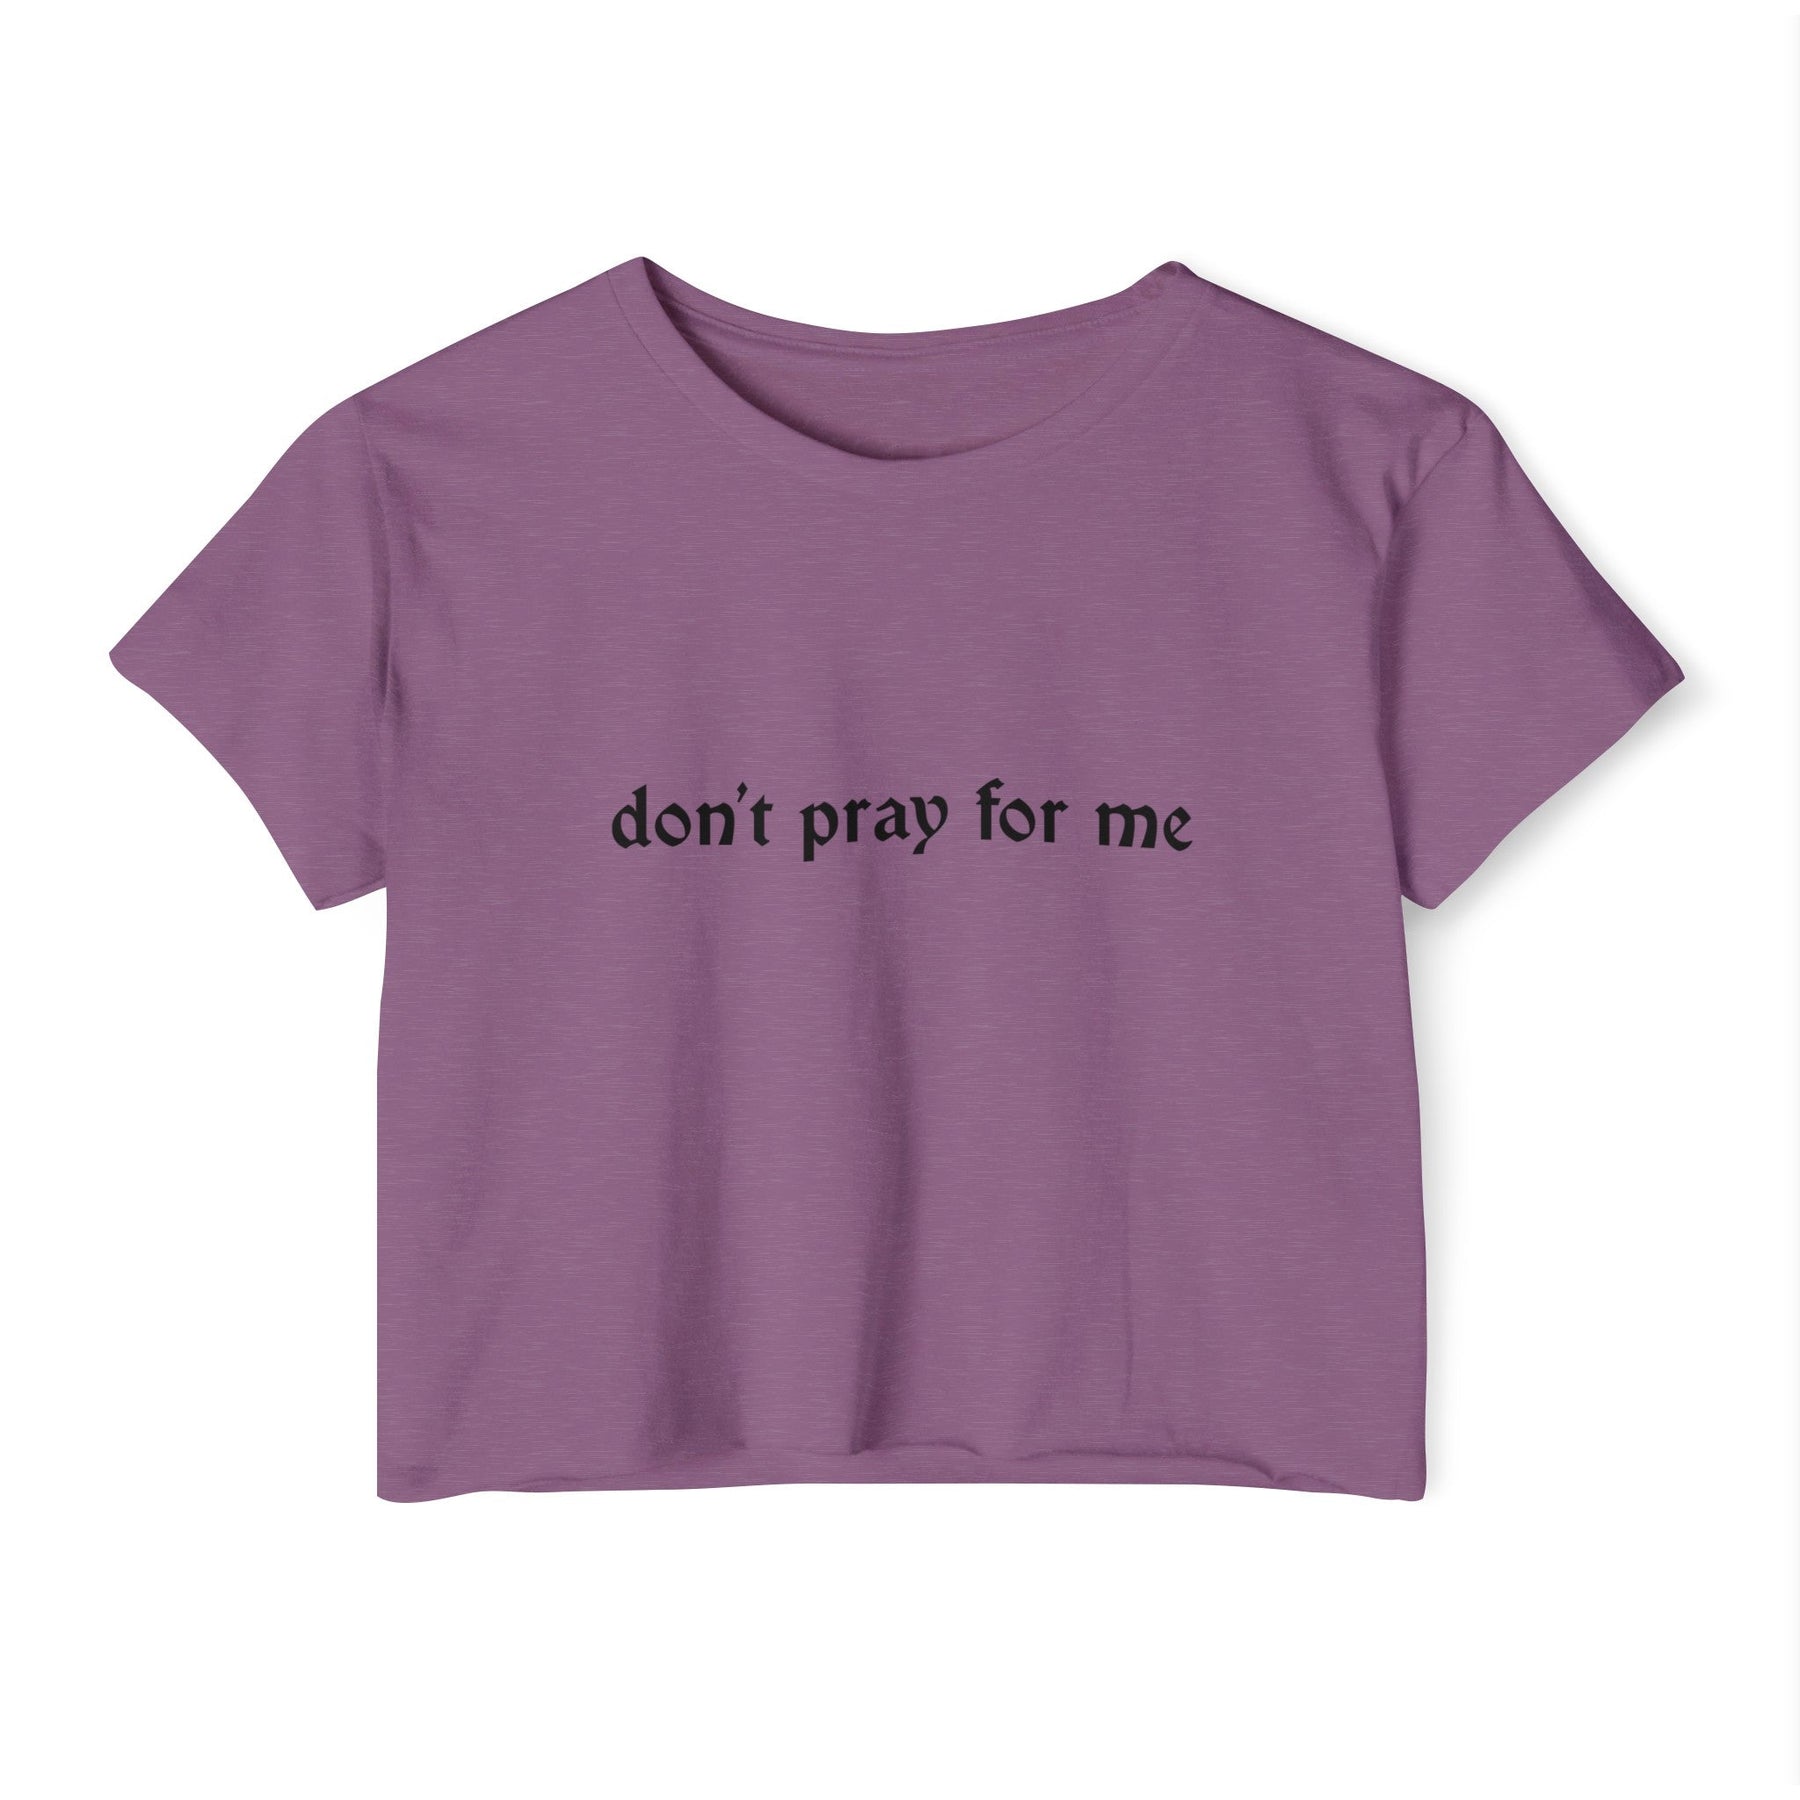 Don't Pray for Me Women's Lightweight Crop Top - Goth Cloth Co.T - Shirt61754221185380624057